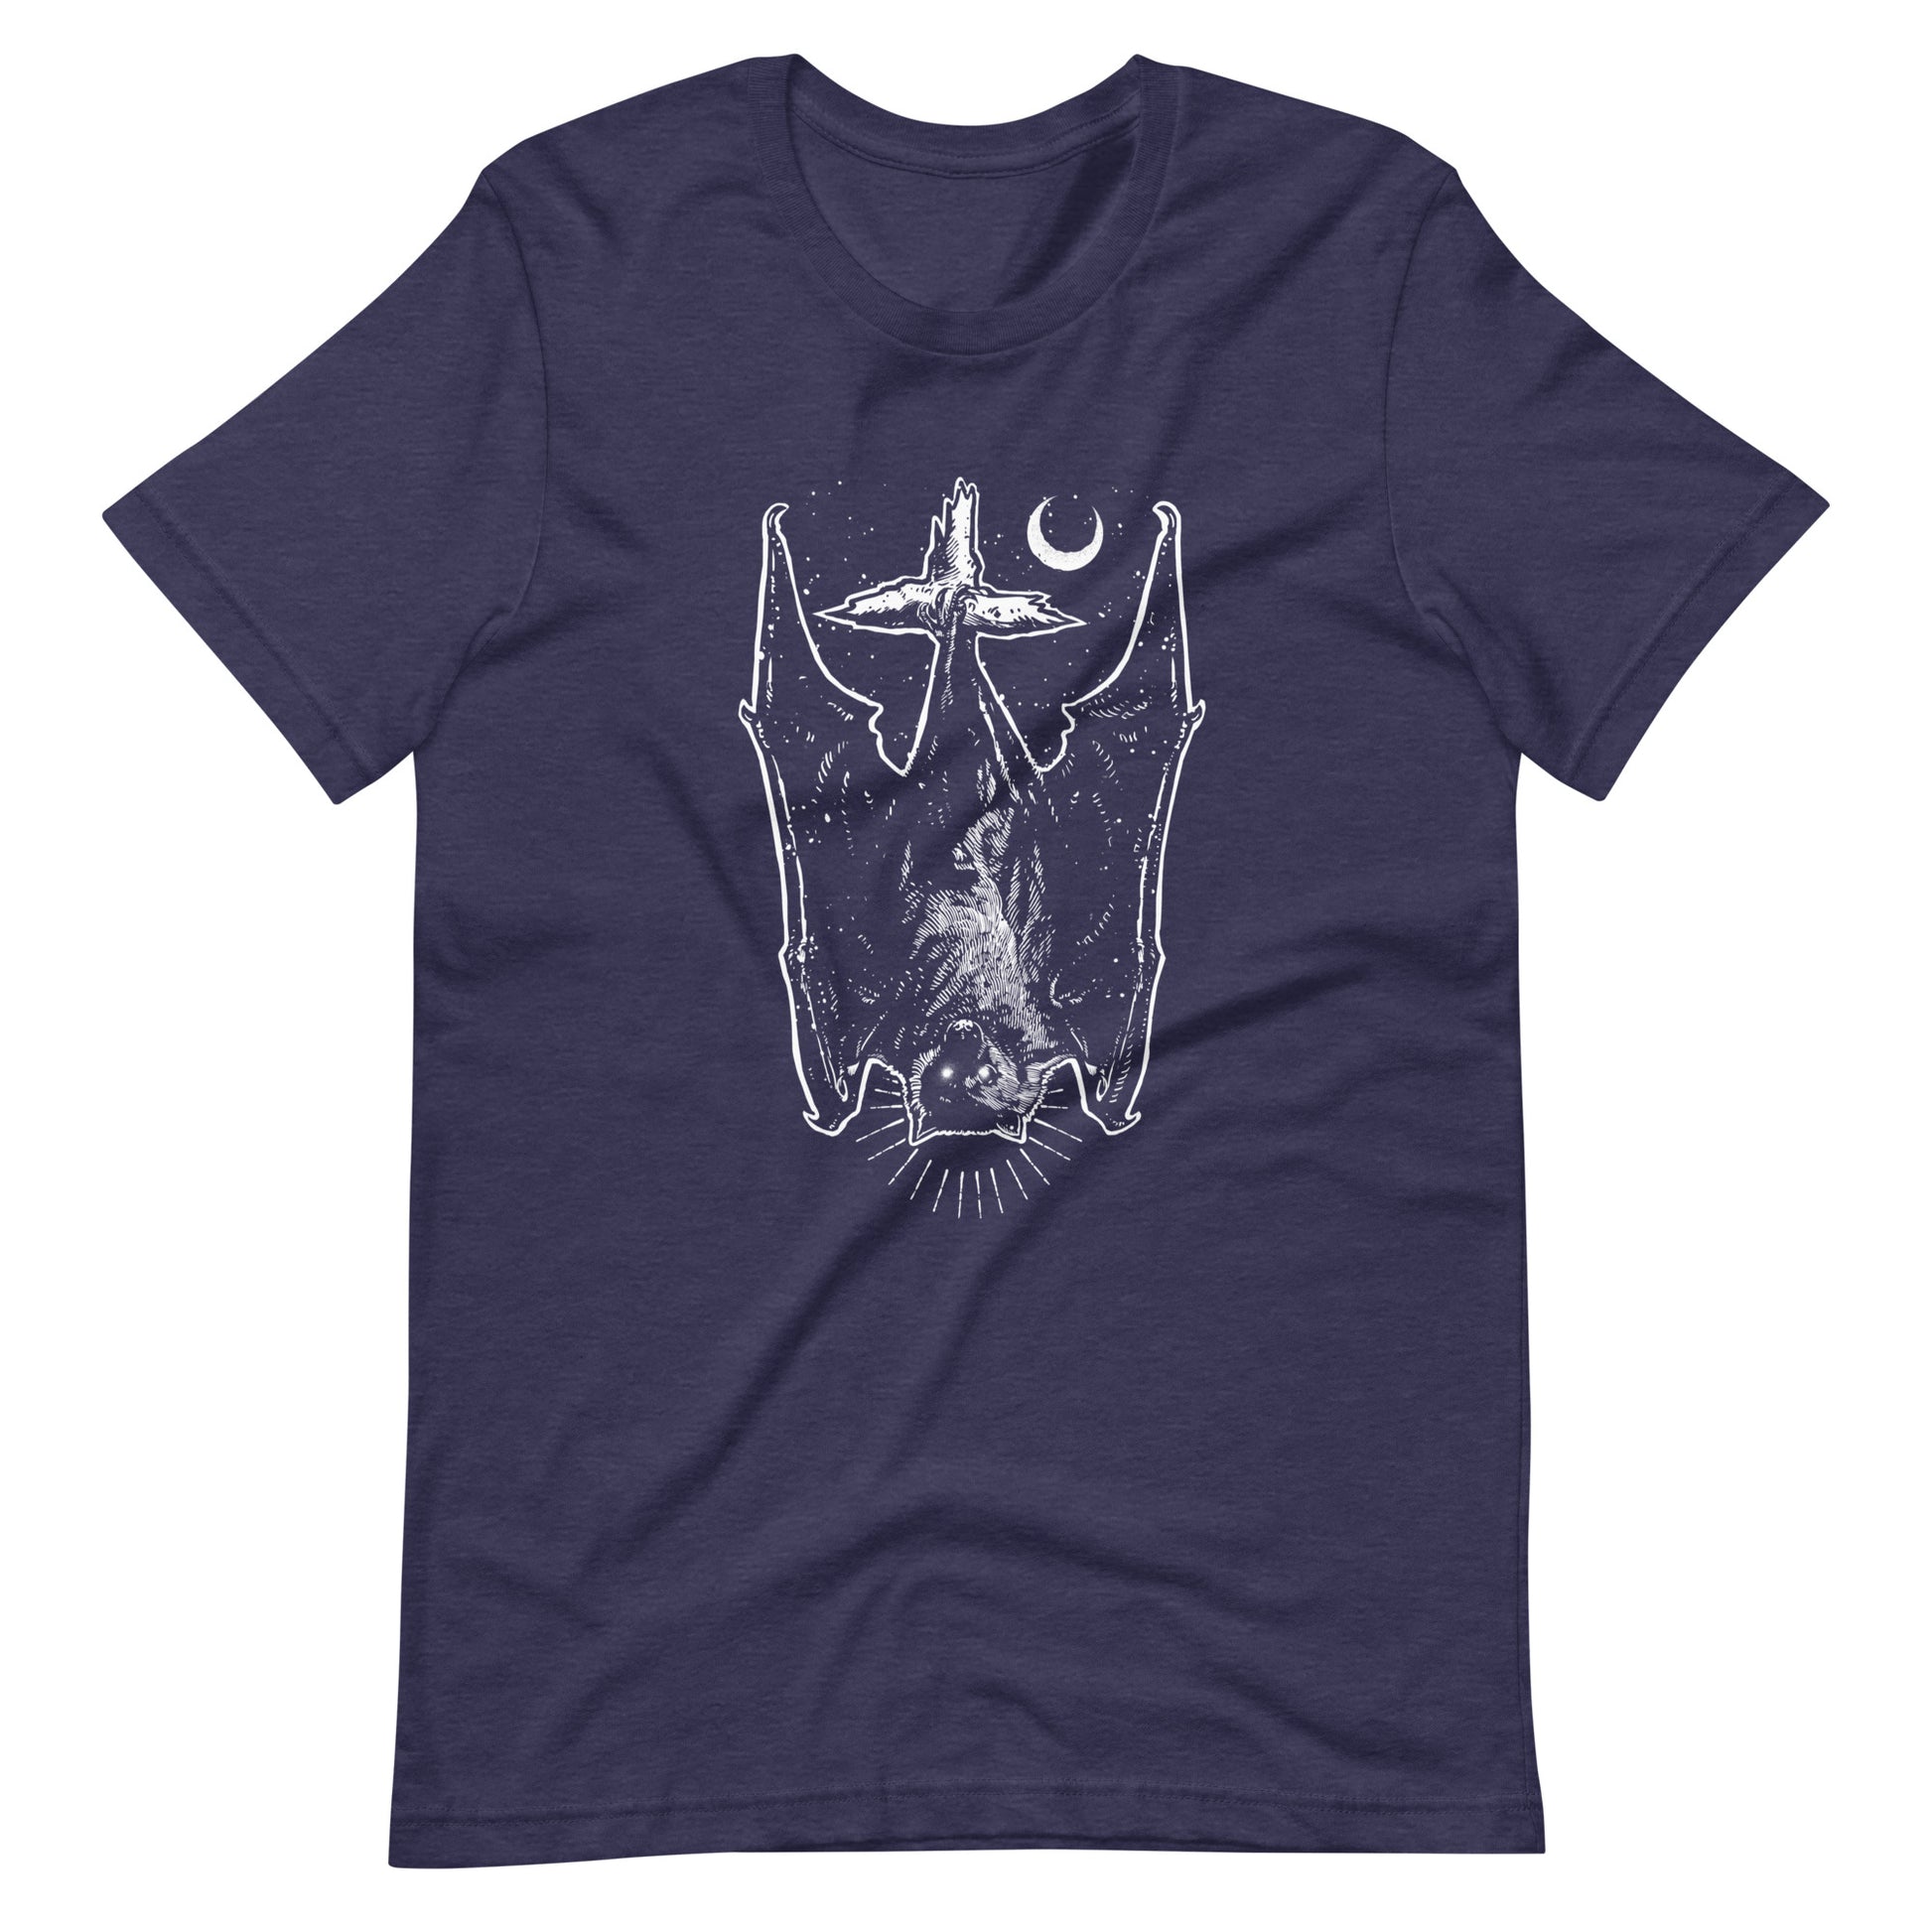 Bat - Men's t-shirt - Heather Midnight Navy Front